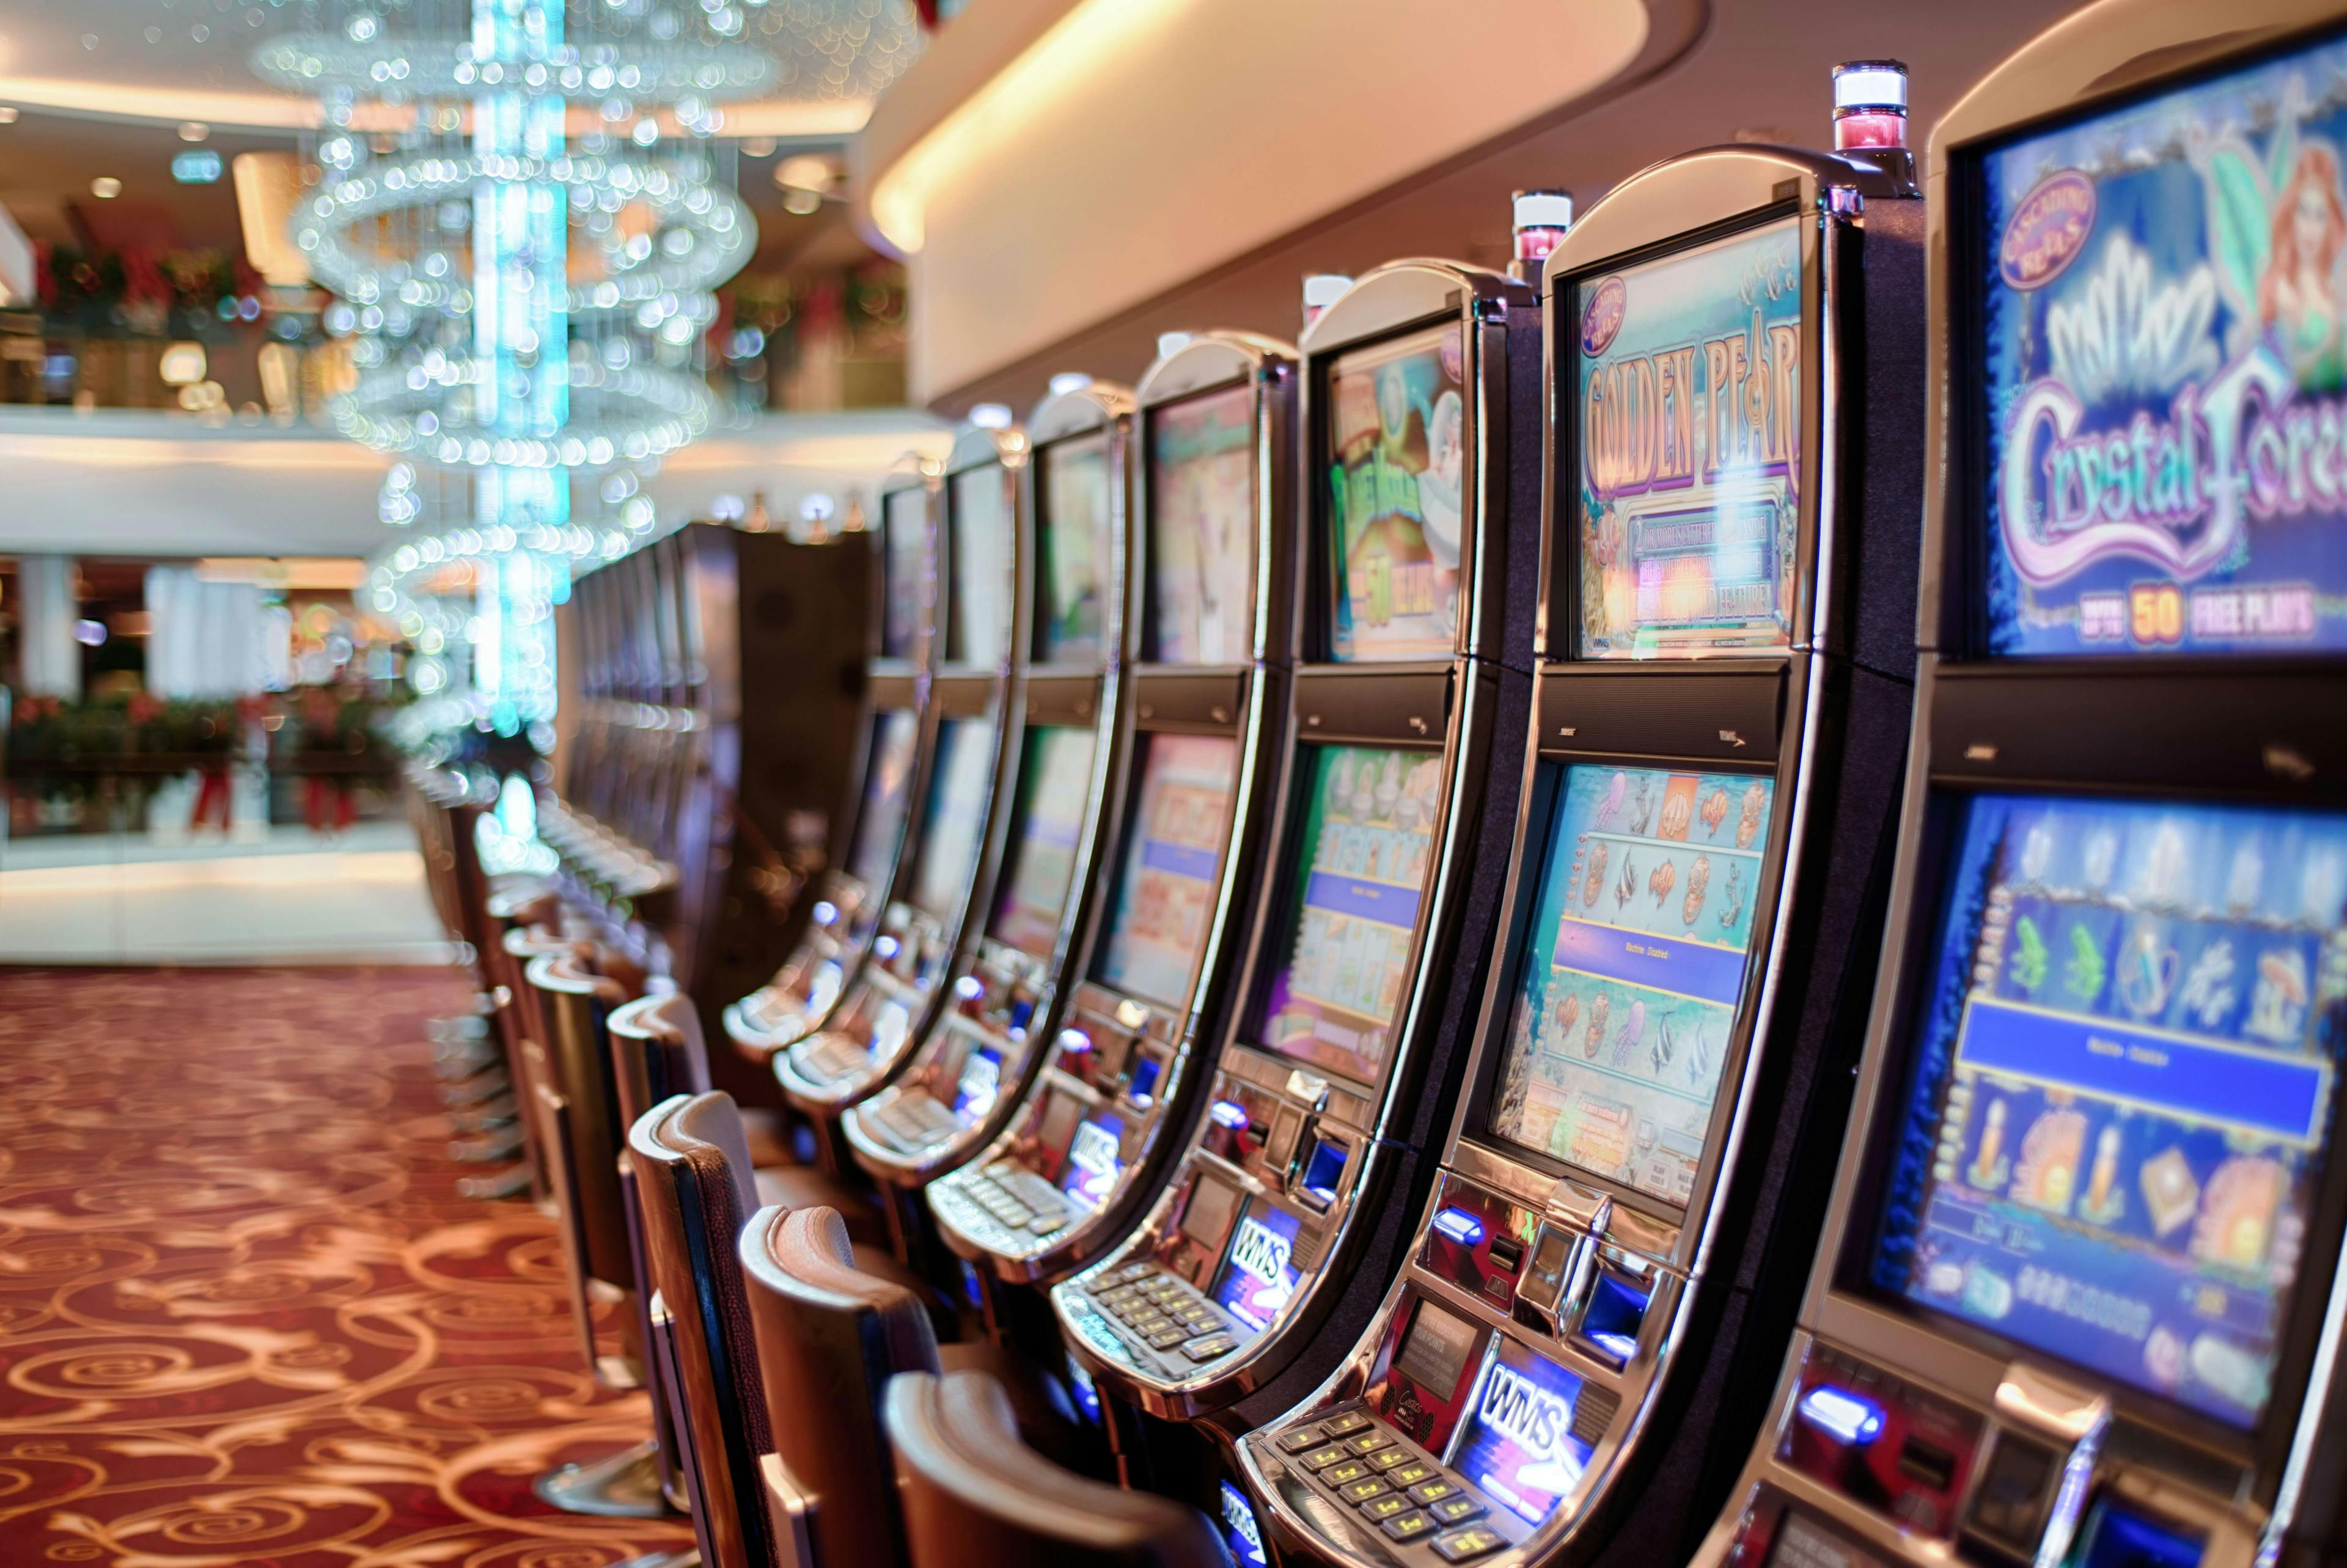 Casino Security Fails To Intervene During Violent Assault